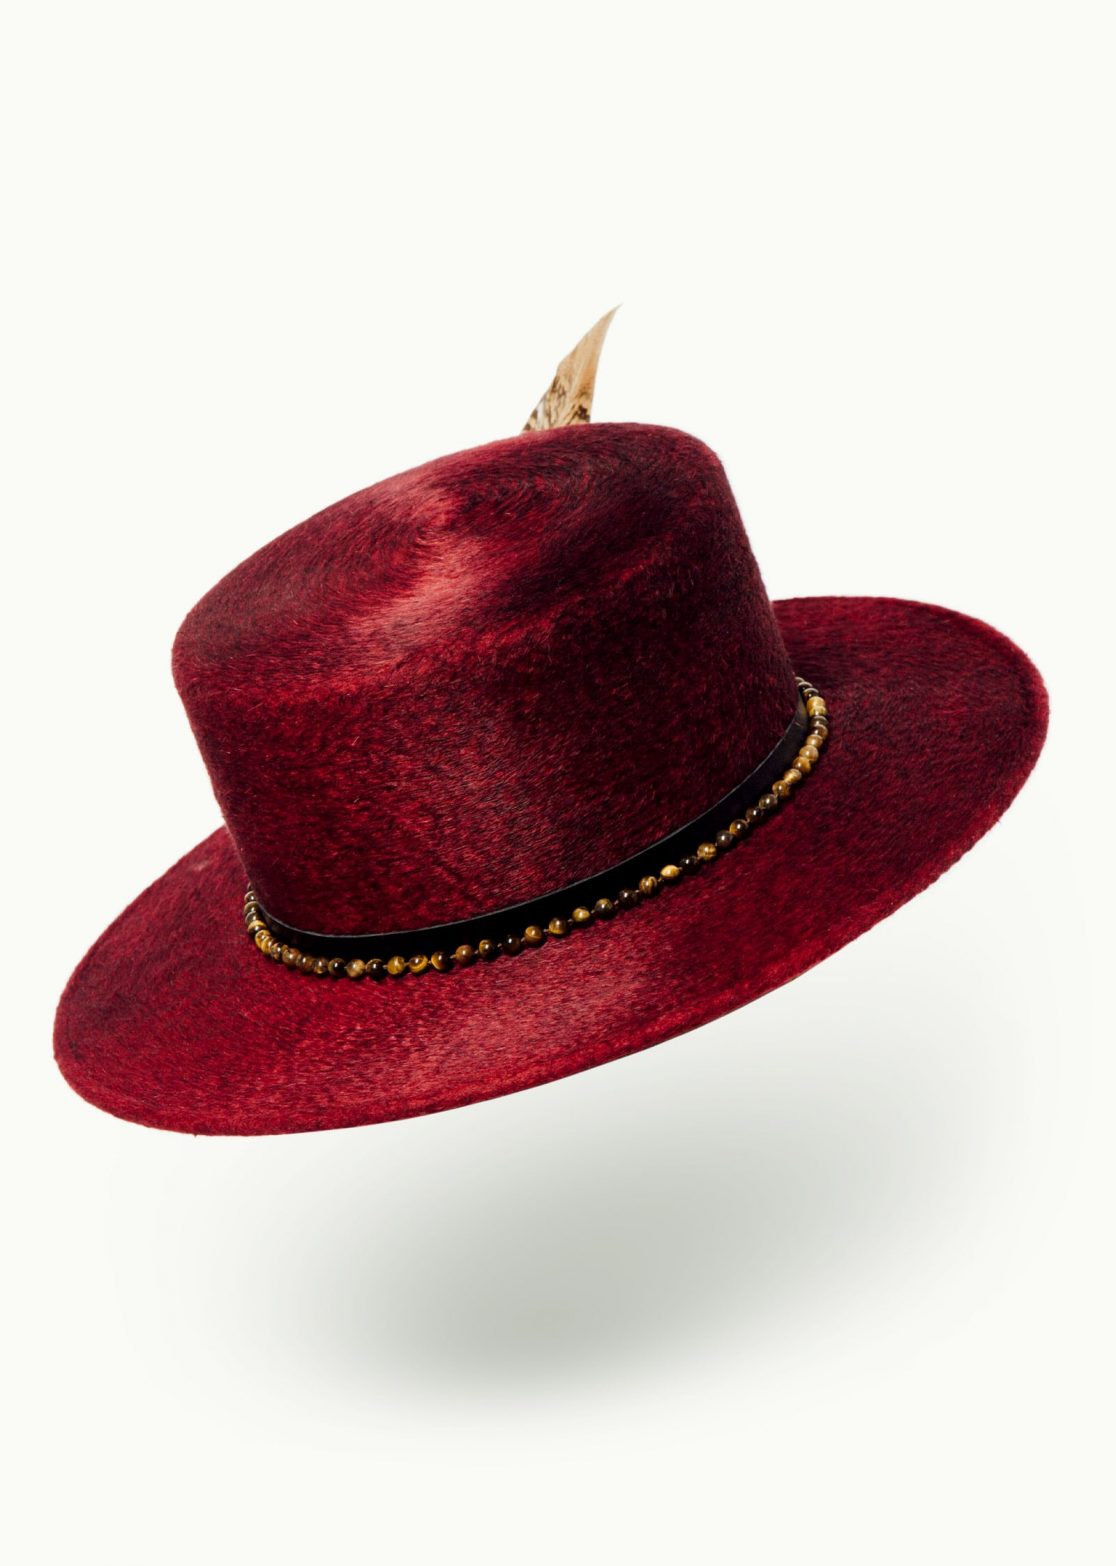 Hats - Women - Unisex - Men - Spaniard Red Sangria Image Primary